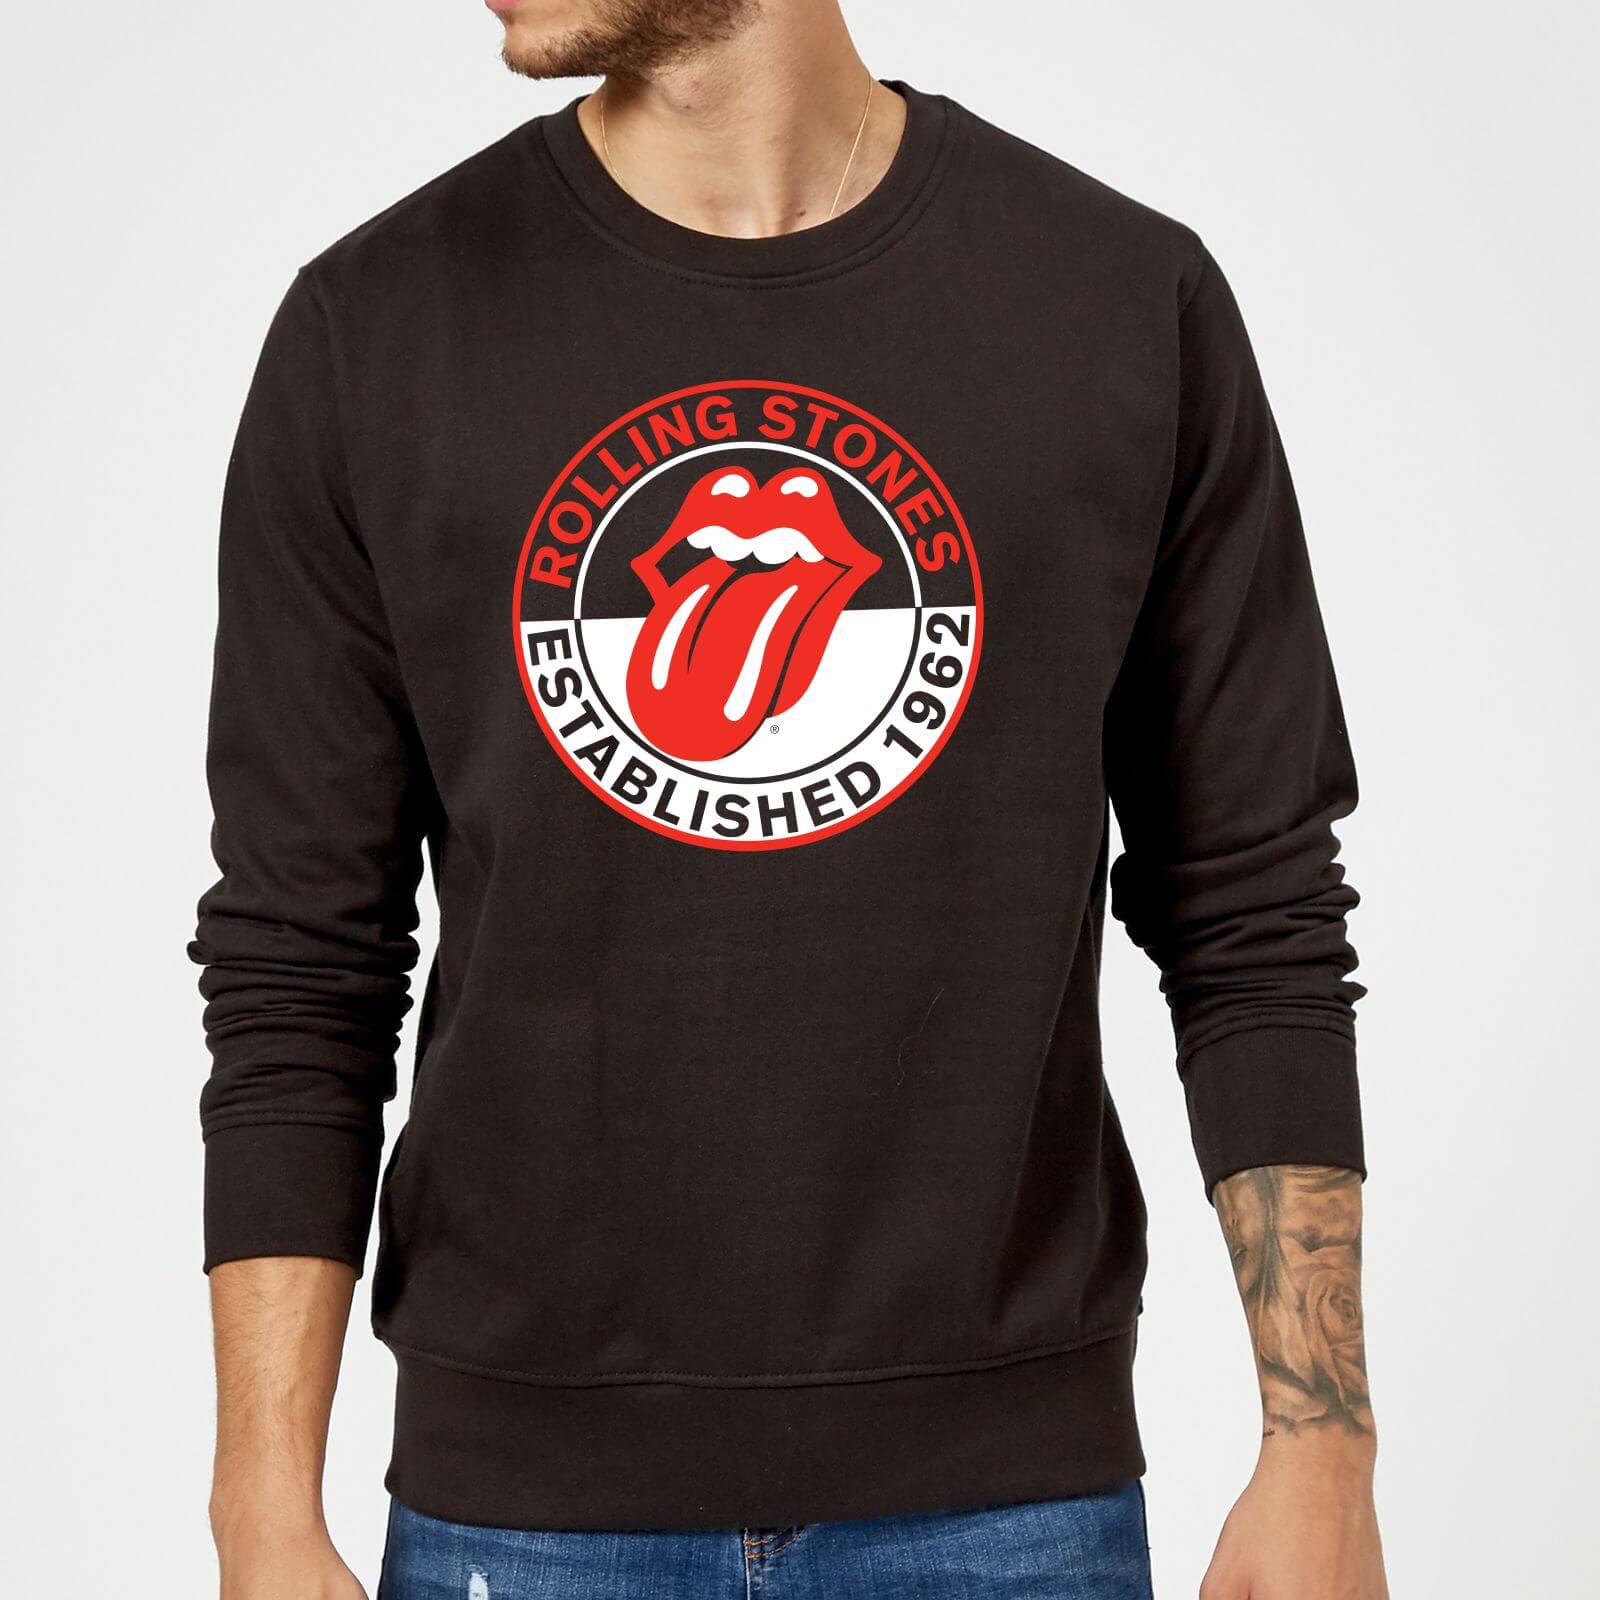 Rolling Stones Est 62 Sweatshirt - Black - L - Black